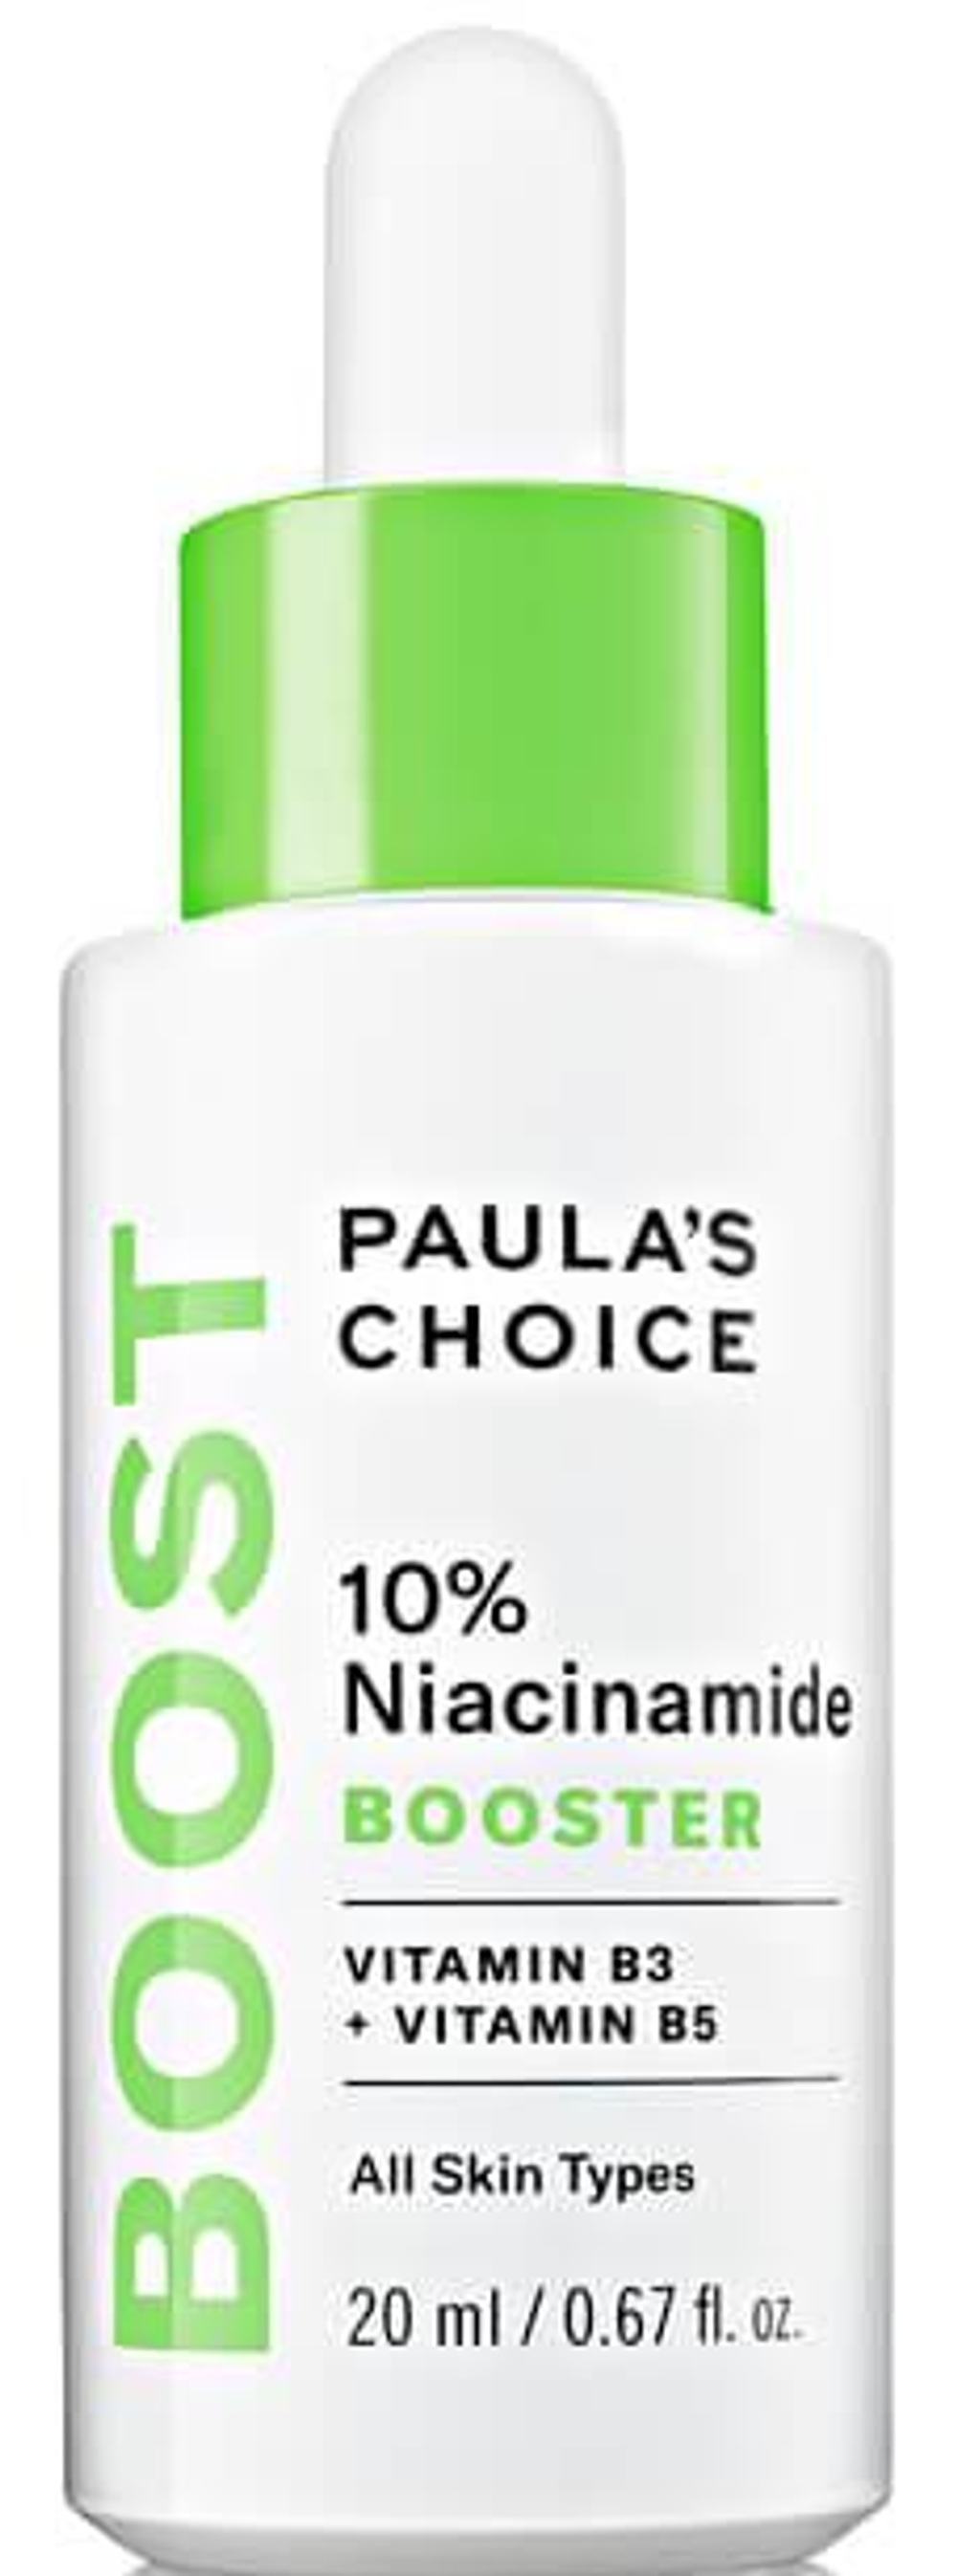 Paula's Choice 10% Niacinamide Booster сыворотка для лица 20мл